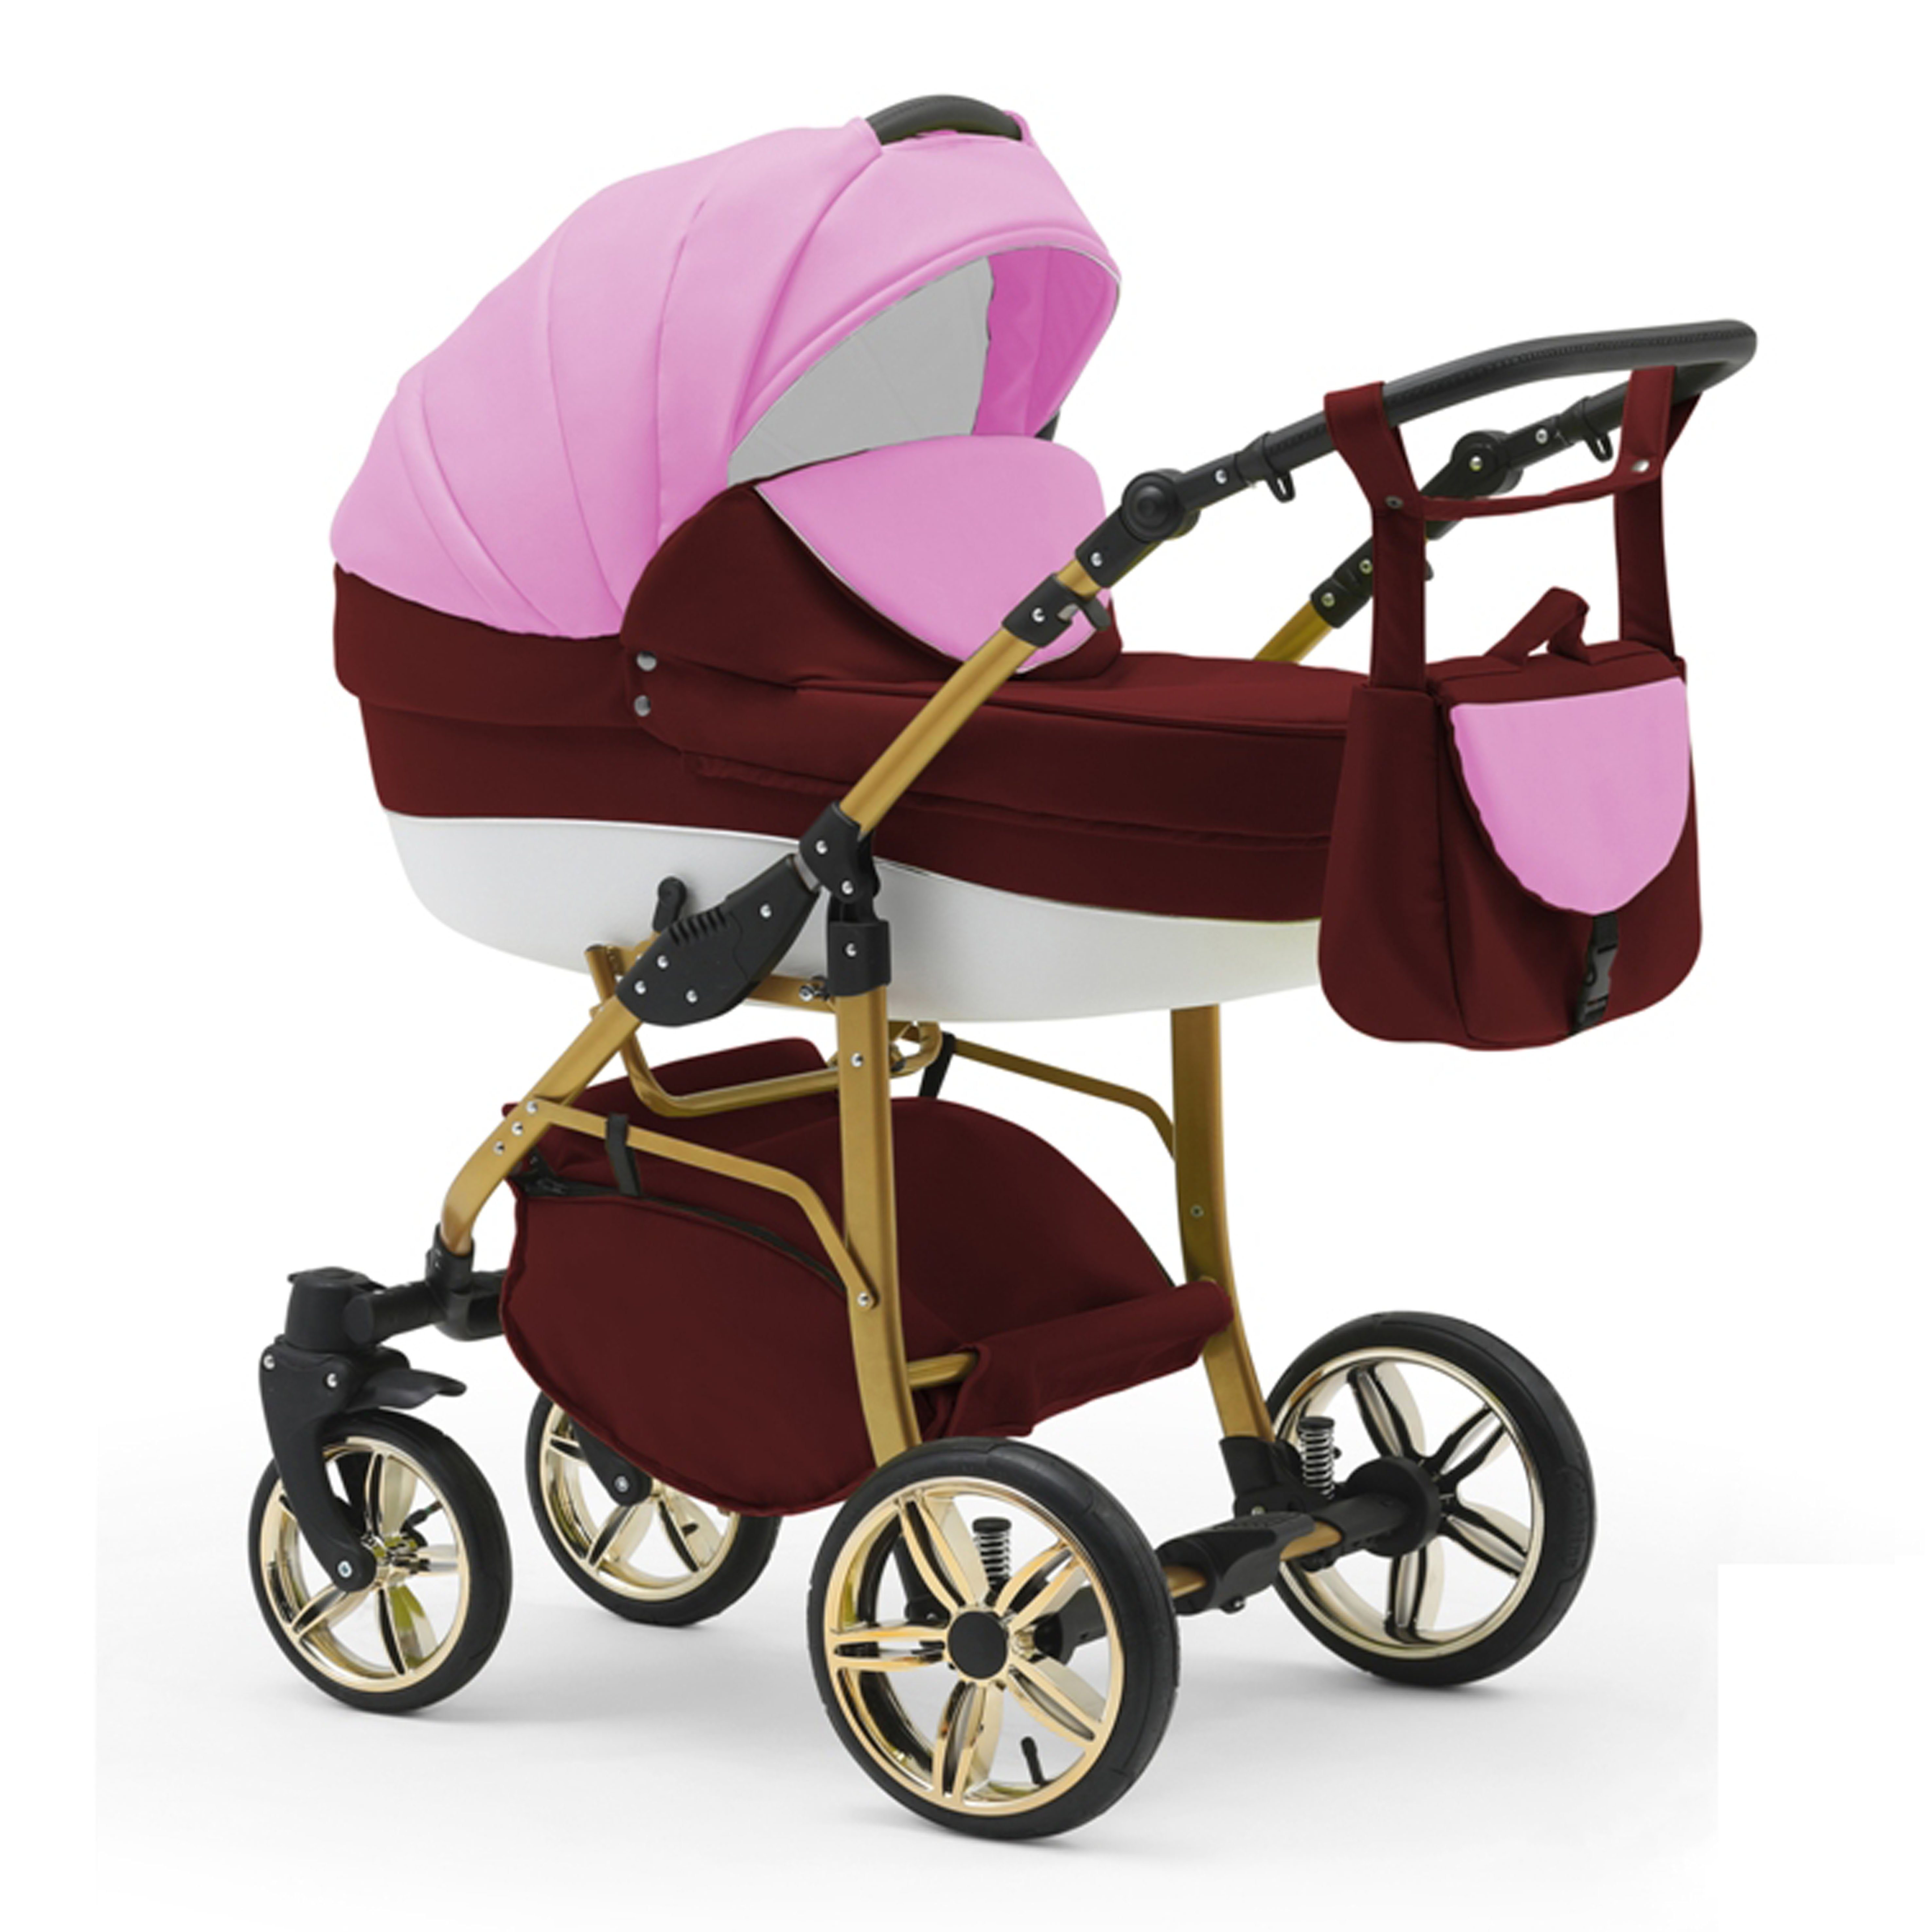 Kinderwagen-Set 2 Rosa-Bordeaux-Weiß babies-on-wheels Cosmo Kombi-Kinderwagen Farben 46 13 - - in in 1 Gold Teile